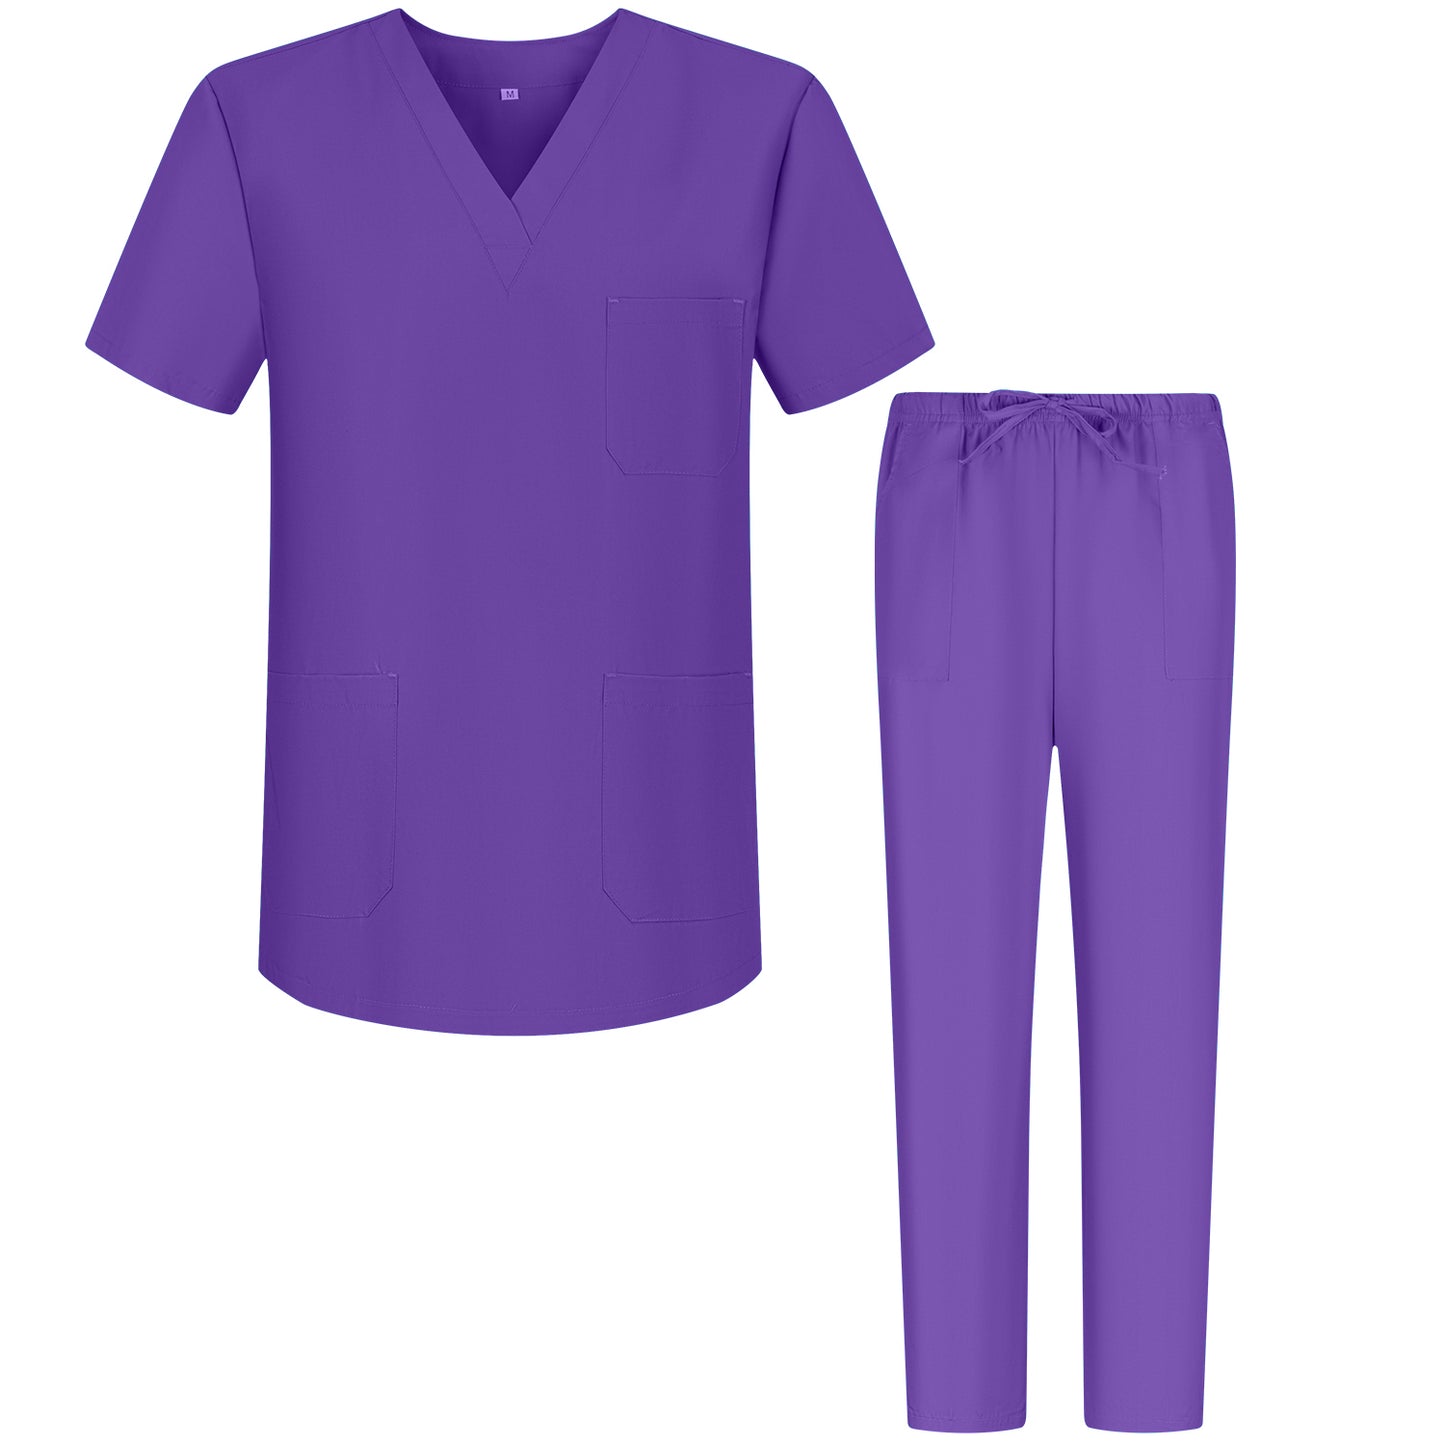 Unisex-Hygieneuniform-Sets – Medizinische Uniformen 6801–6802